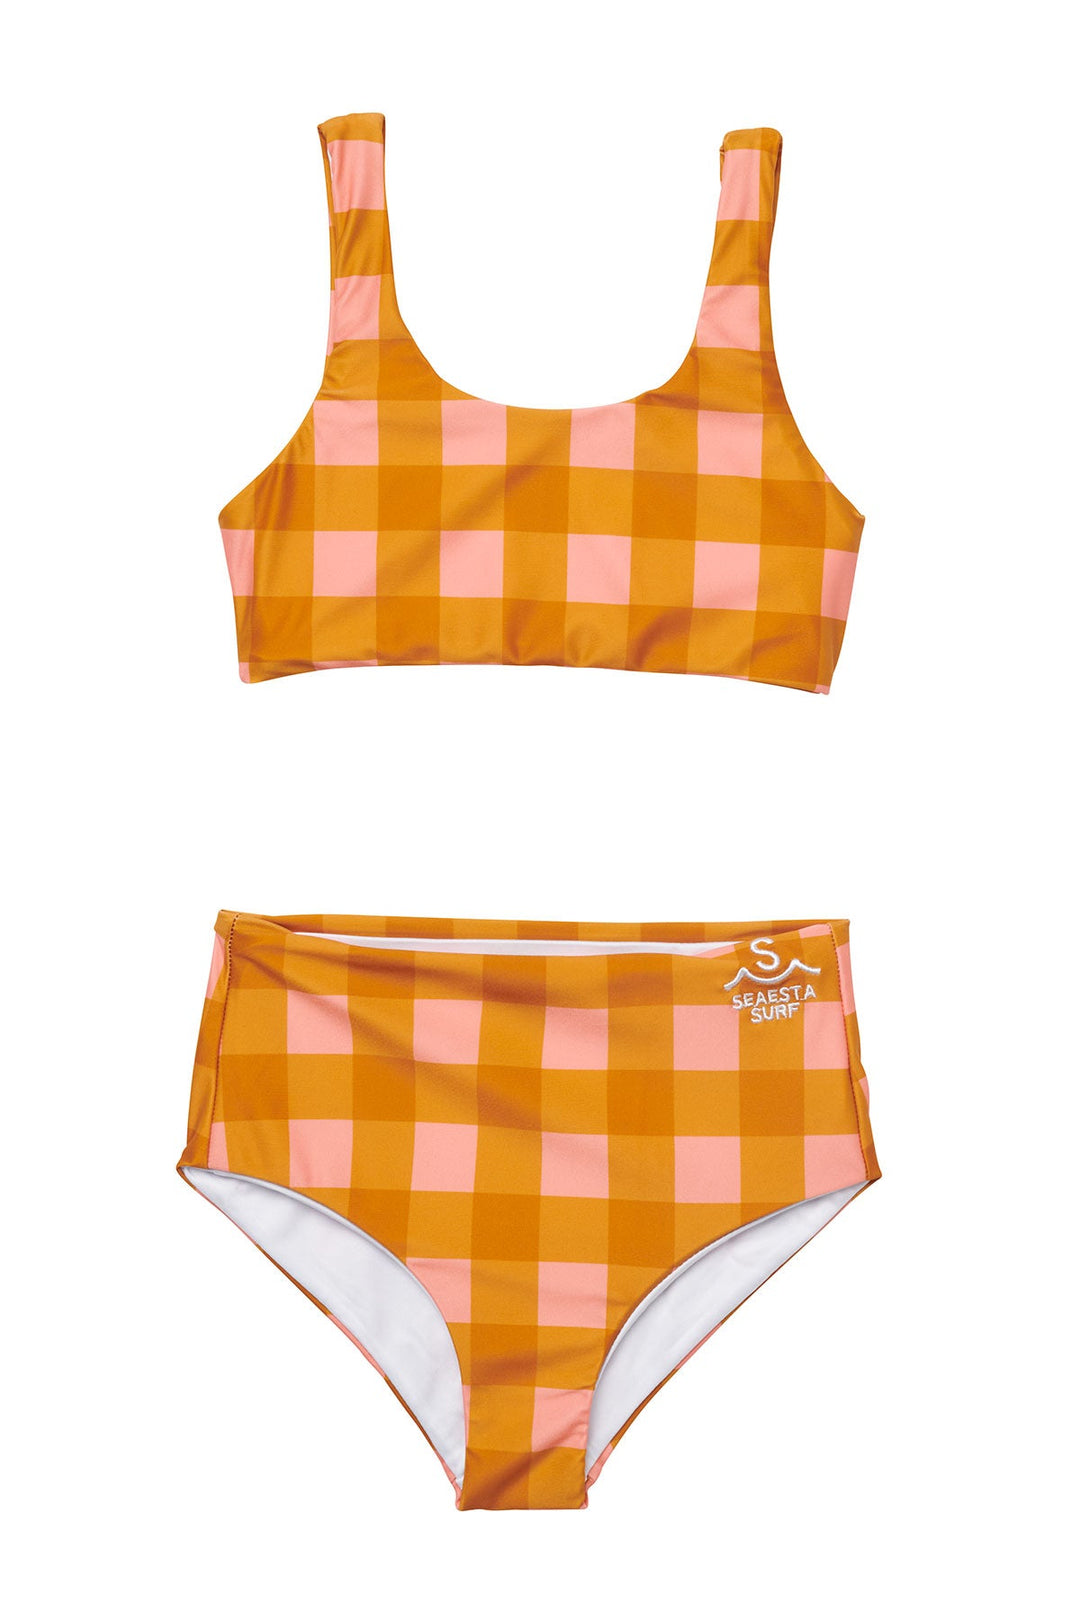 Seaside Gingham/ Two Piece Swimsuit in Rust Orange